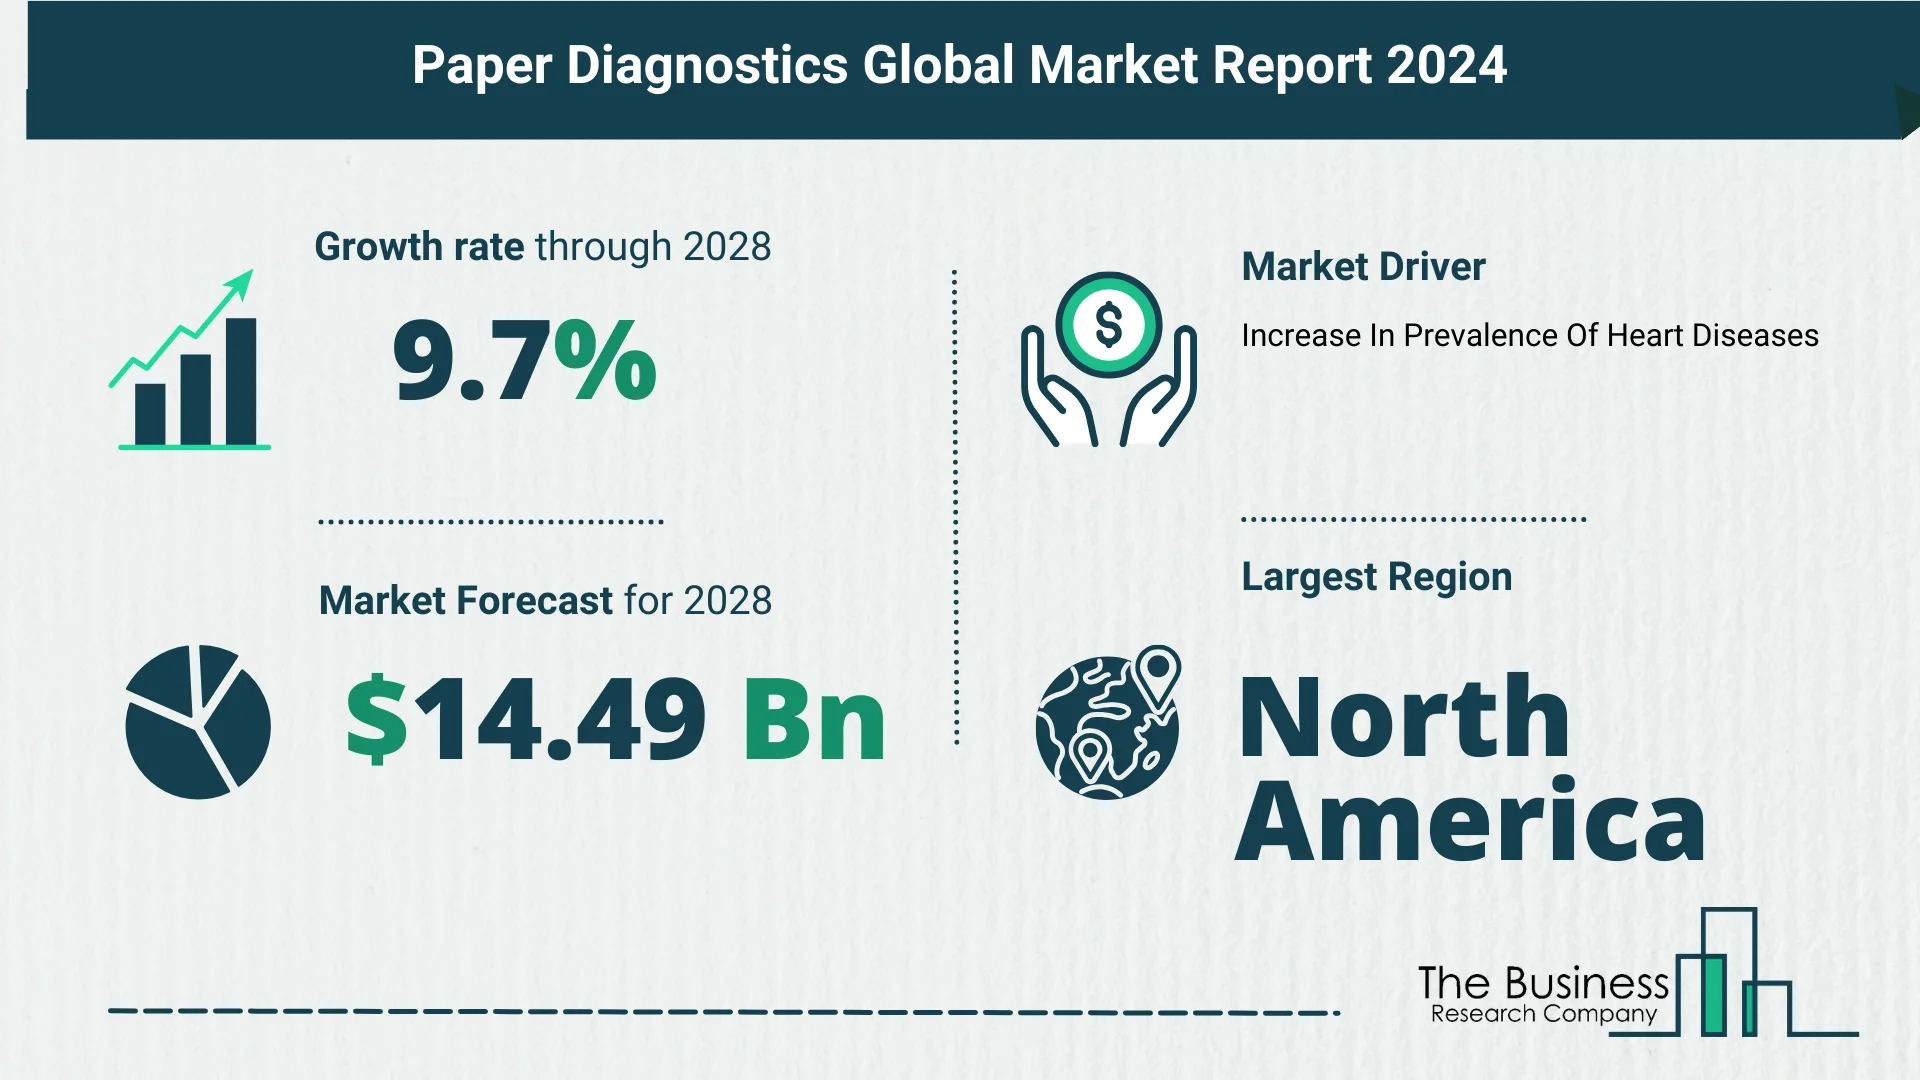 Global Paper Diagnostics Market Size